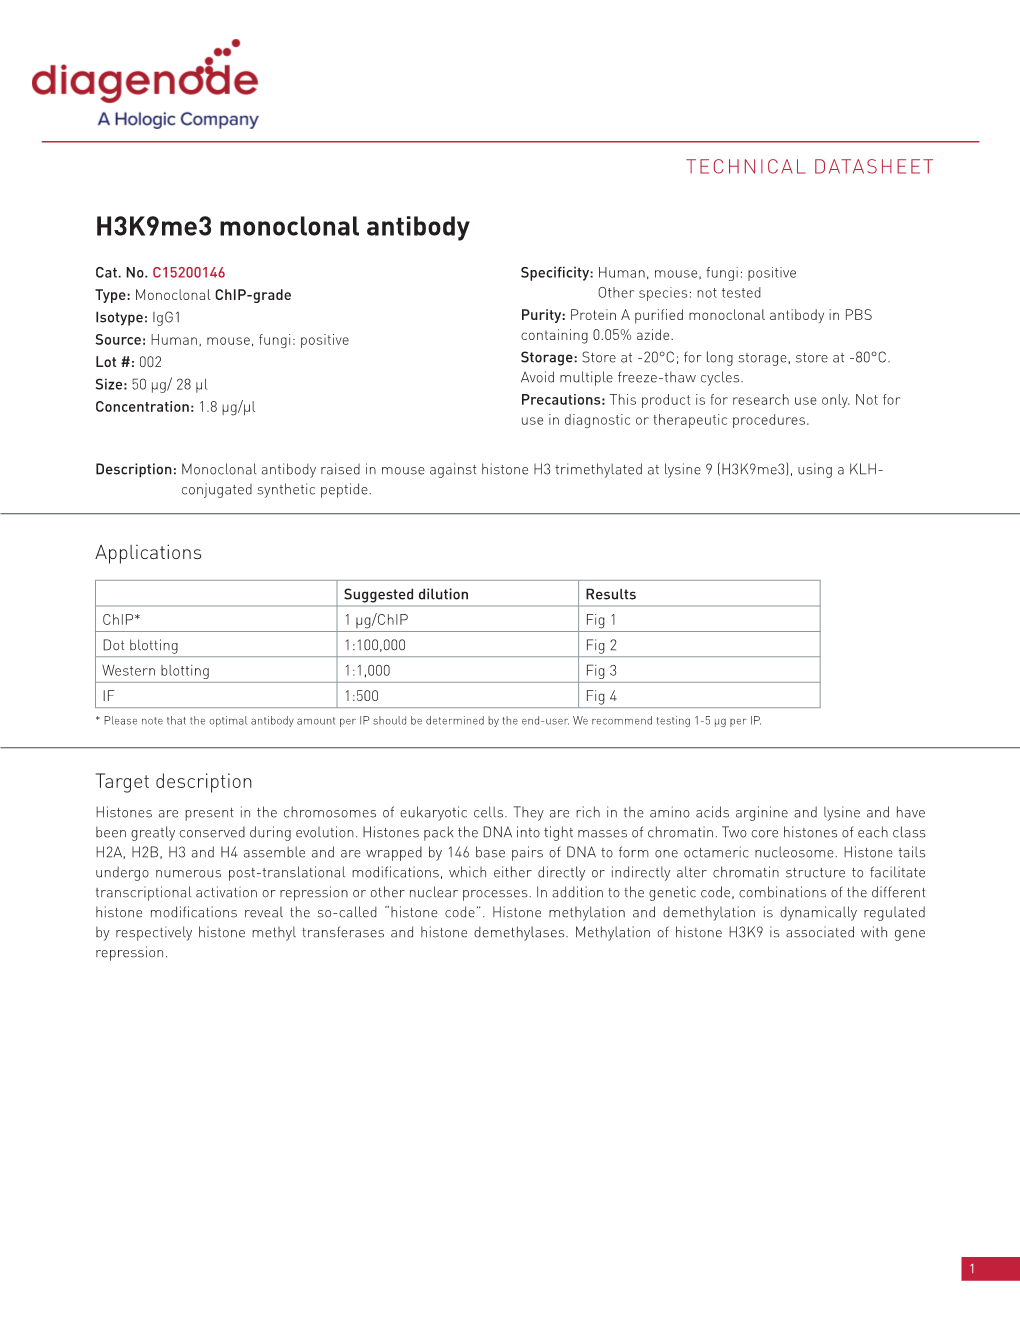 H3k9me3 Monoclonal Antibody